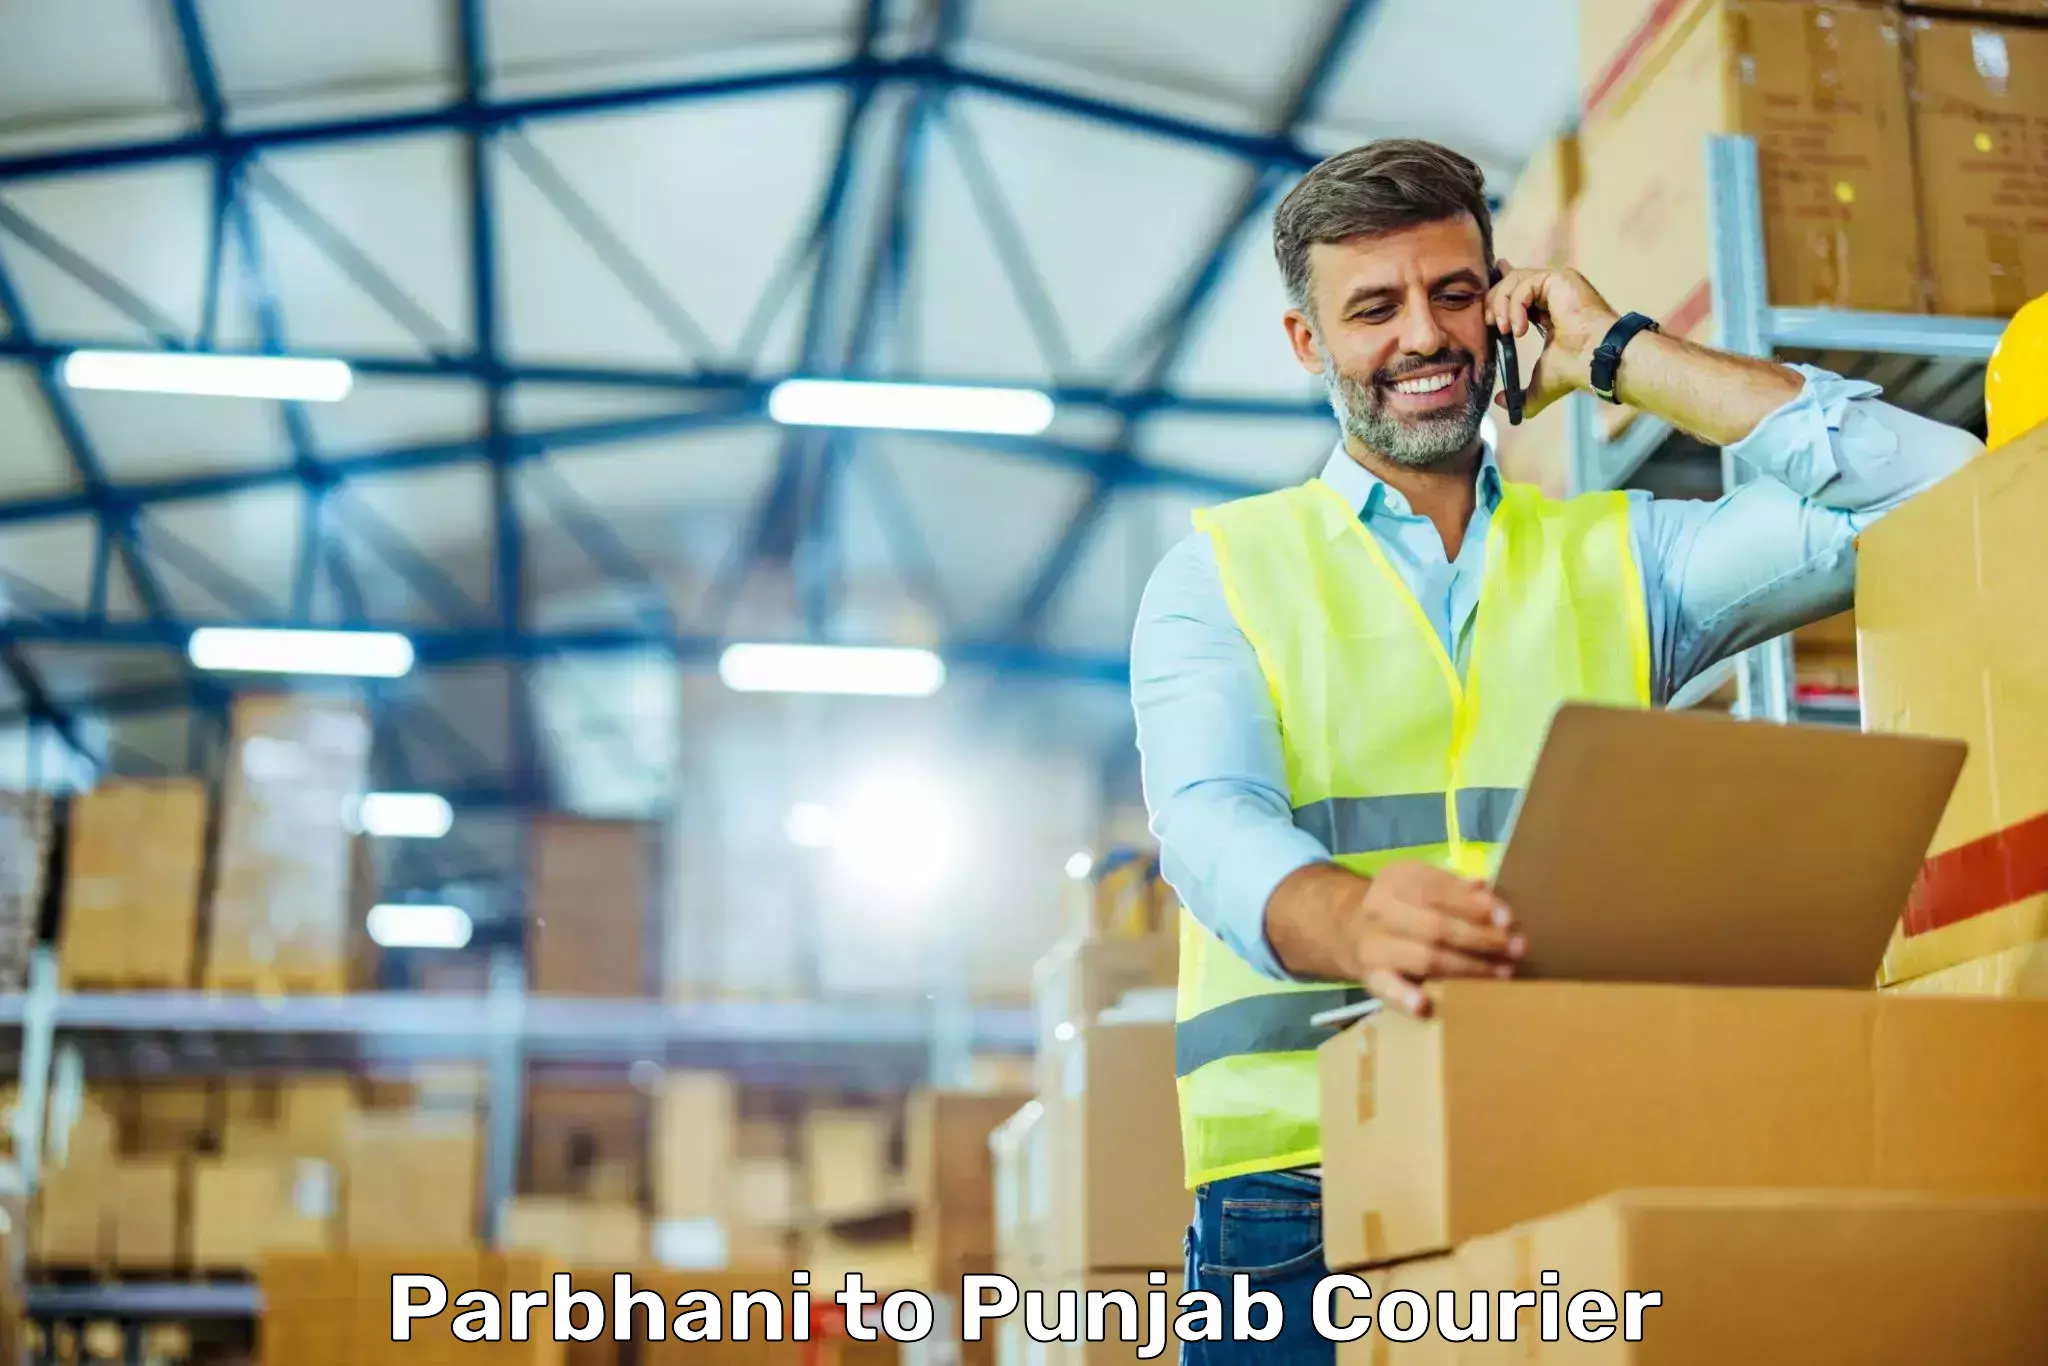 Cash on delivery service Parbhani to Jalandhar